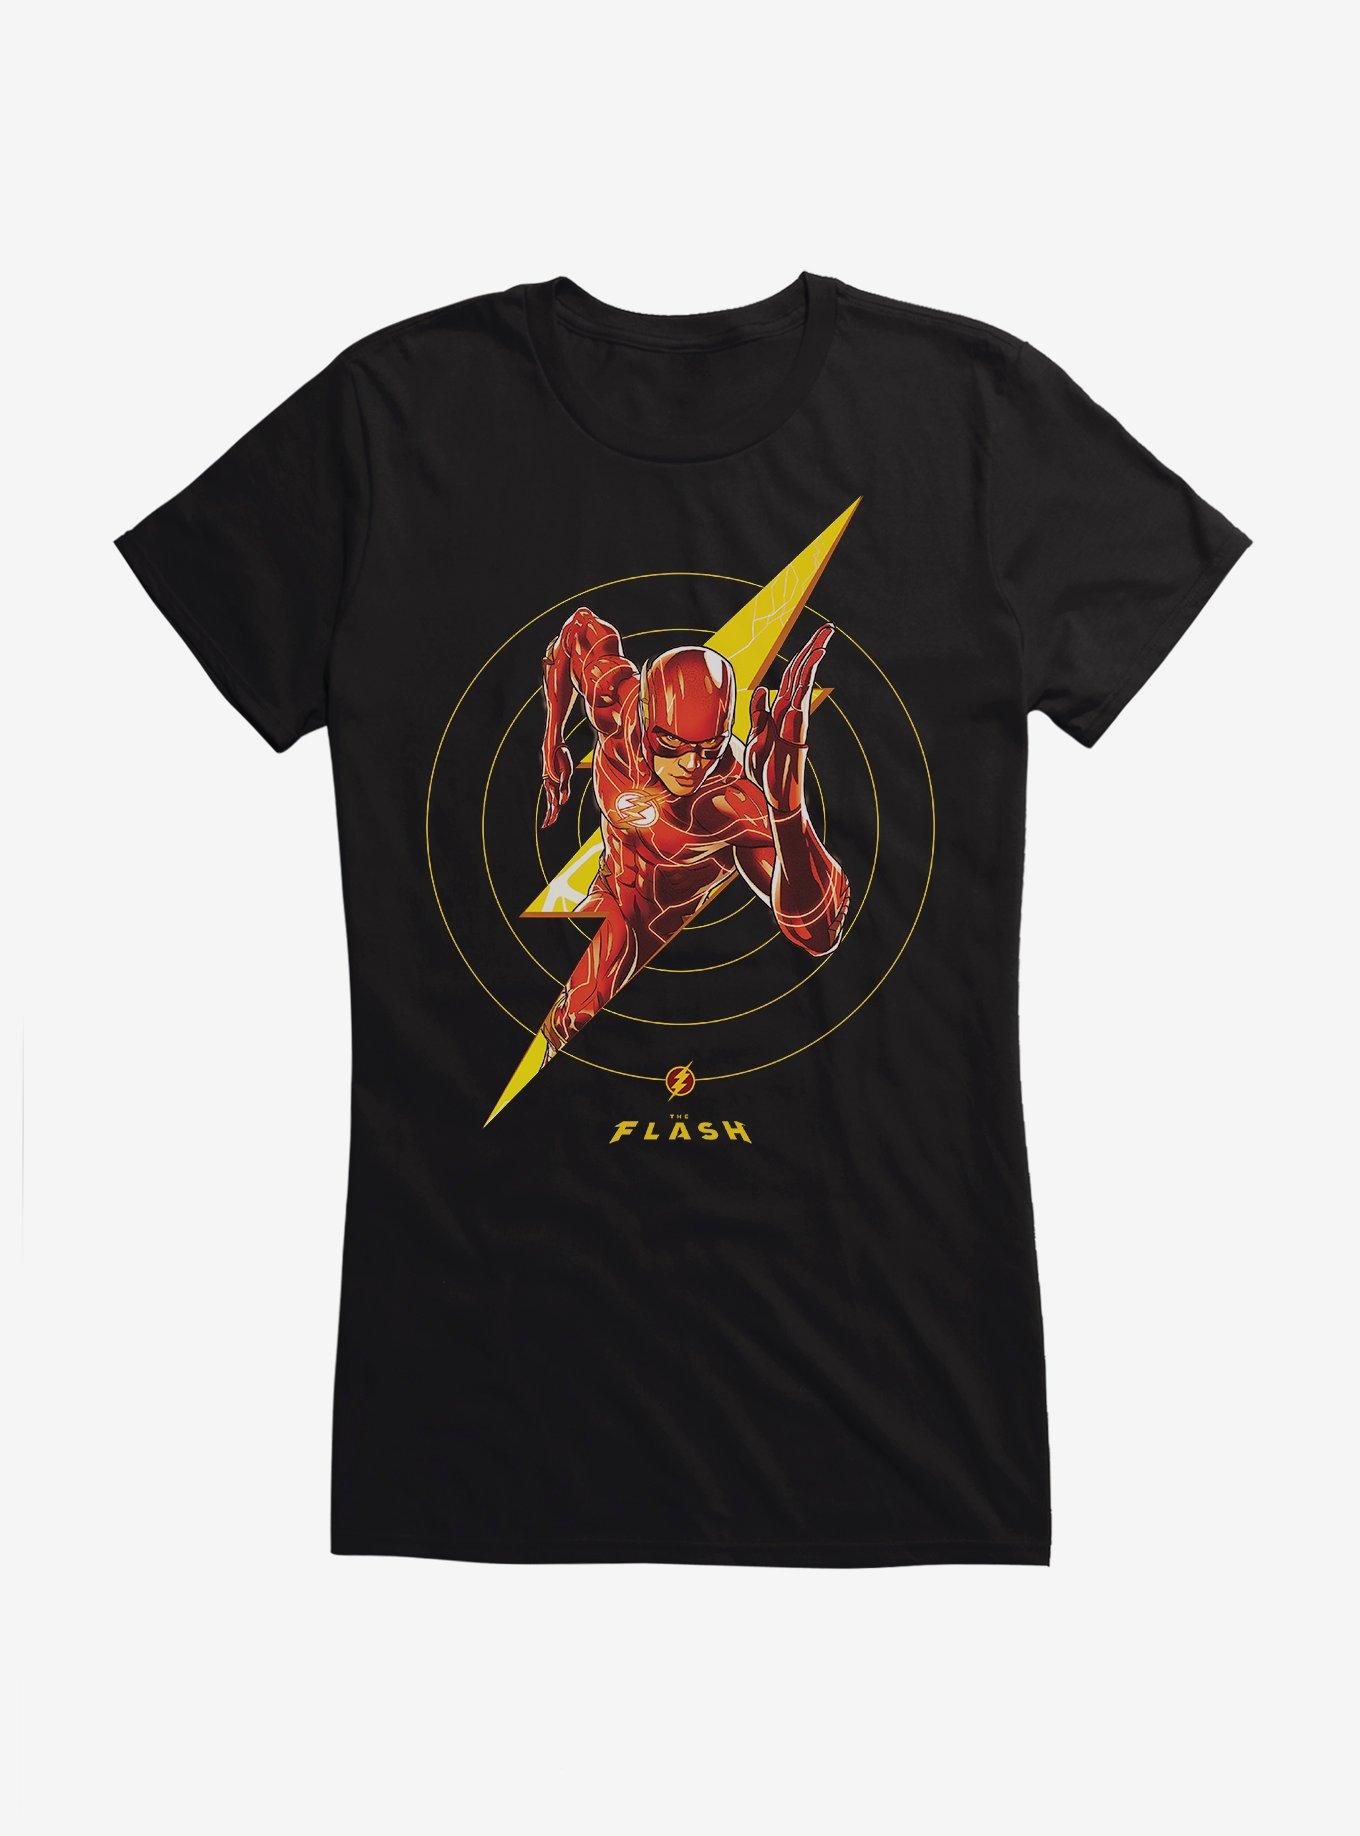 The Flash Break Through Girls T-Shirt